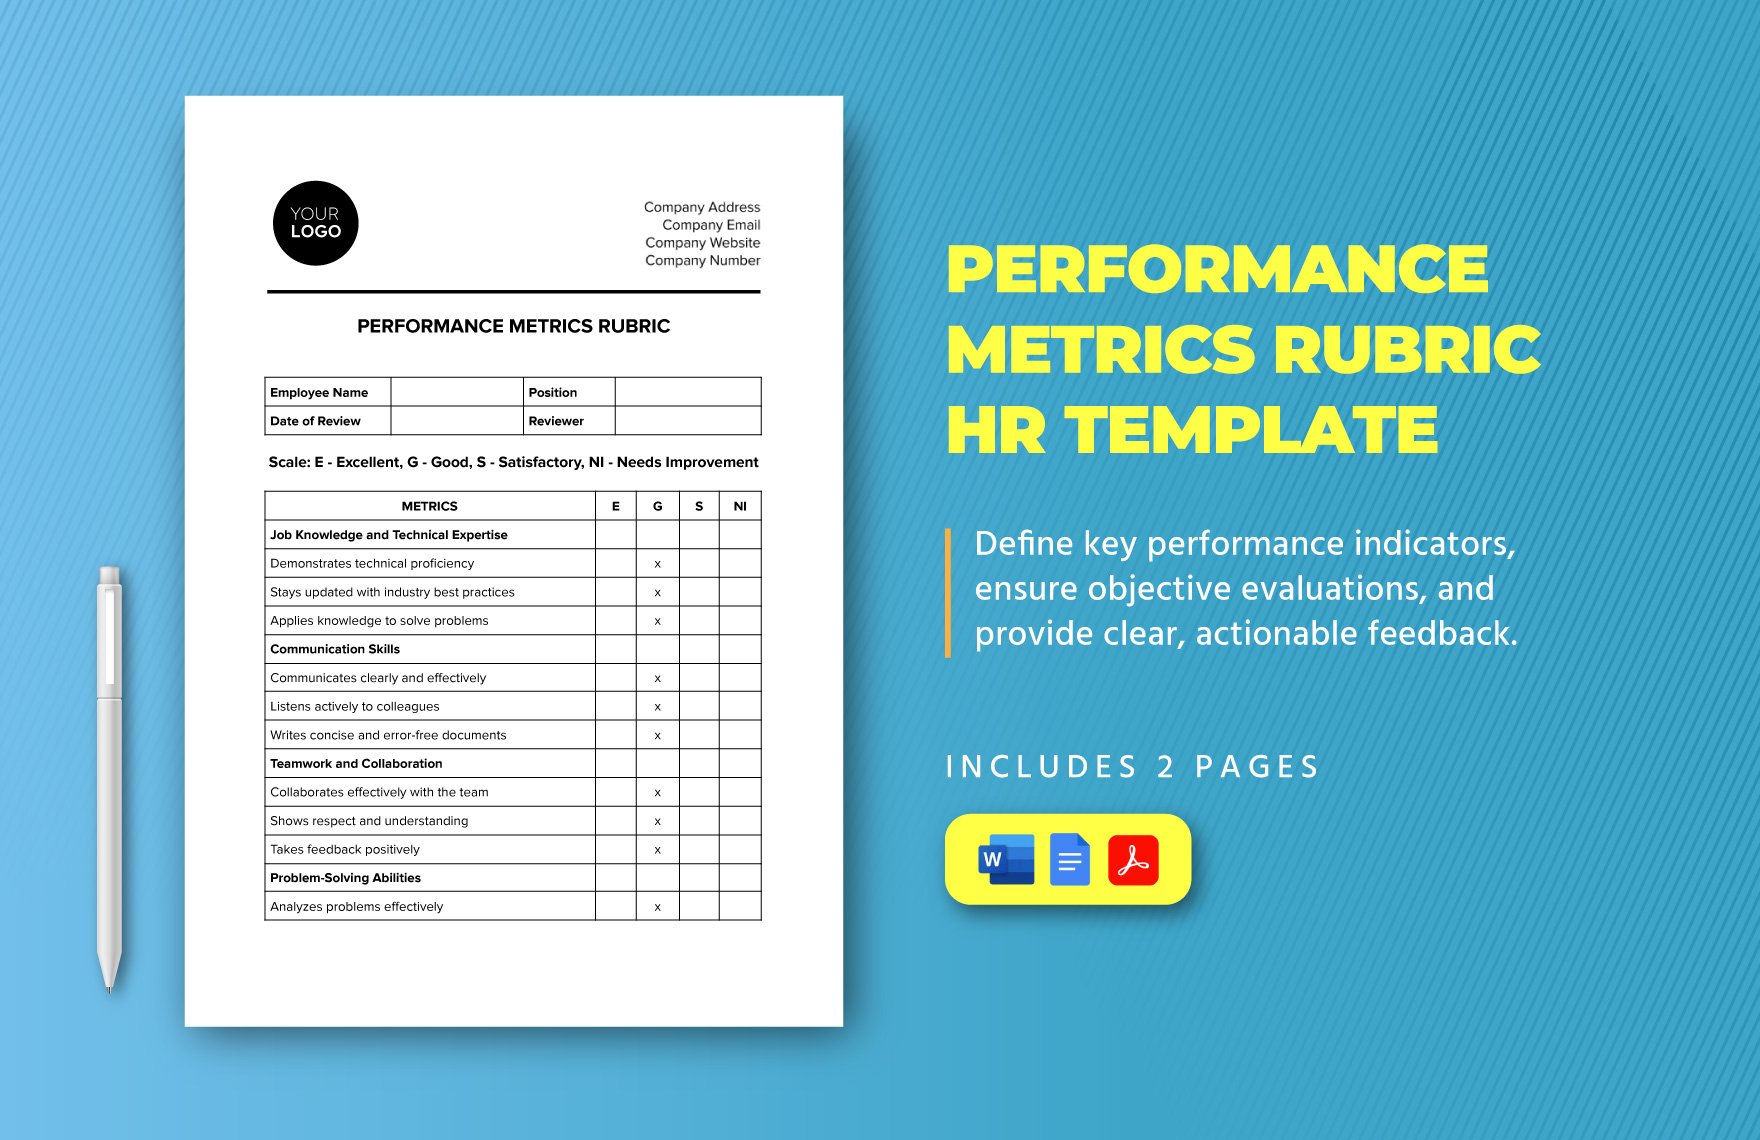 Performance Metrics Rubric HR Template